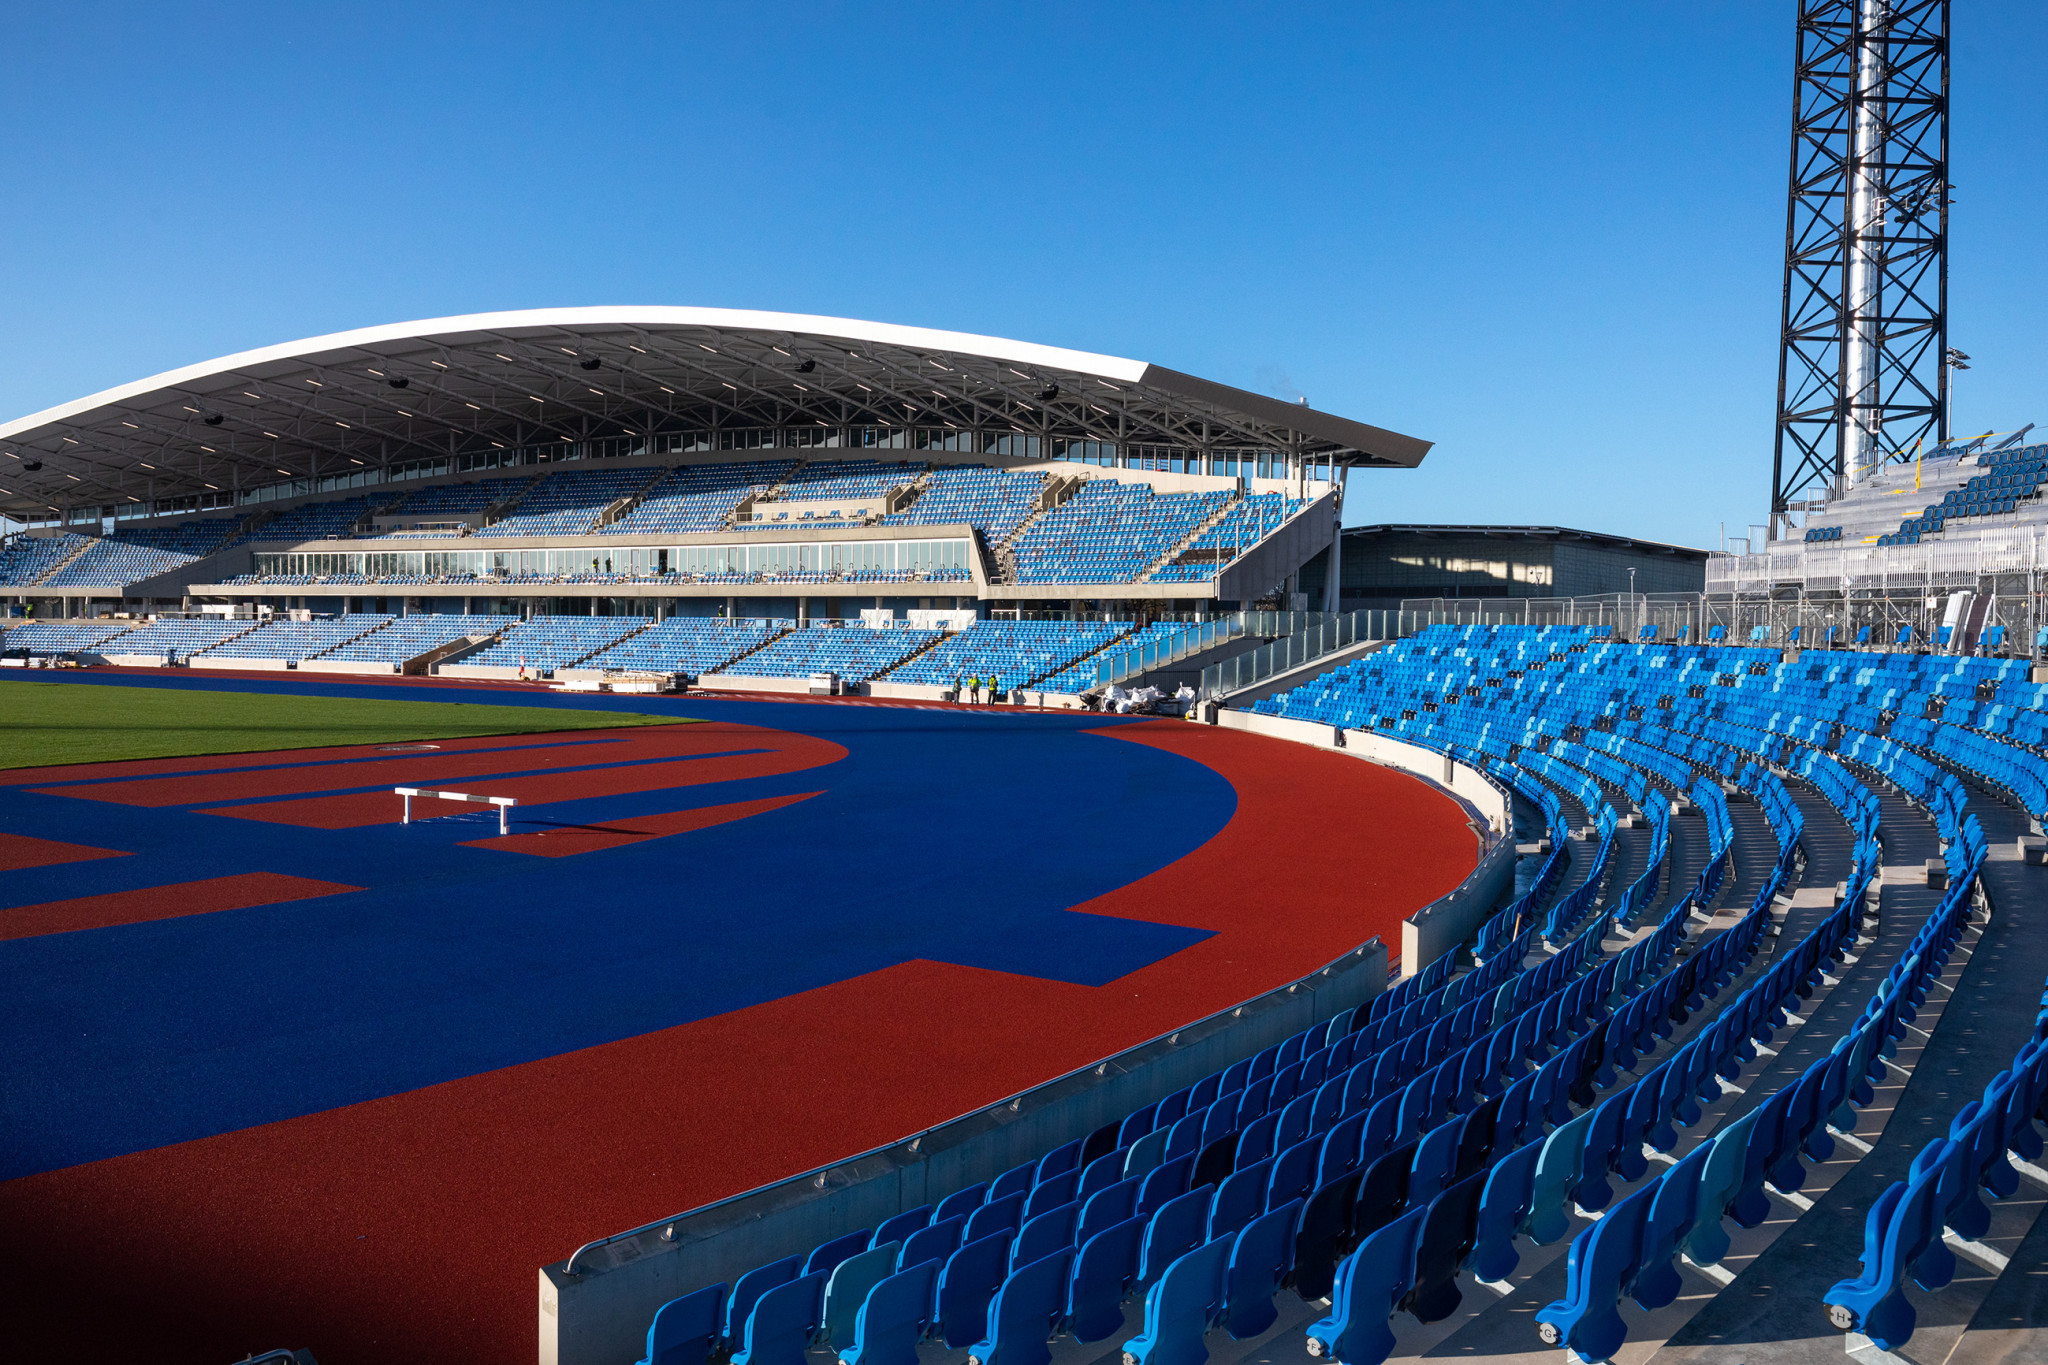 Alexander Stadium was among the venues visited ©Birmingham 2022